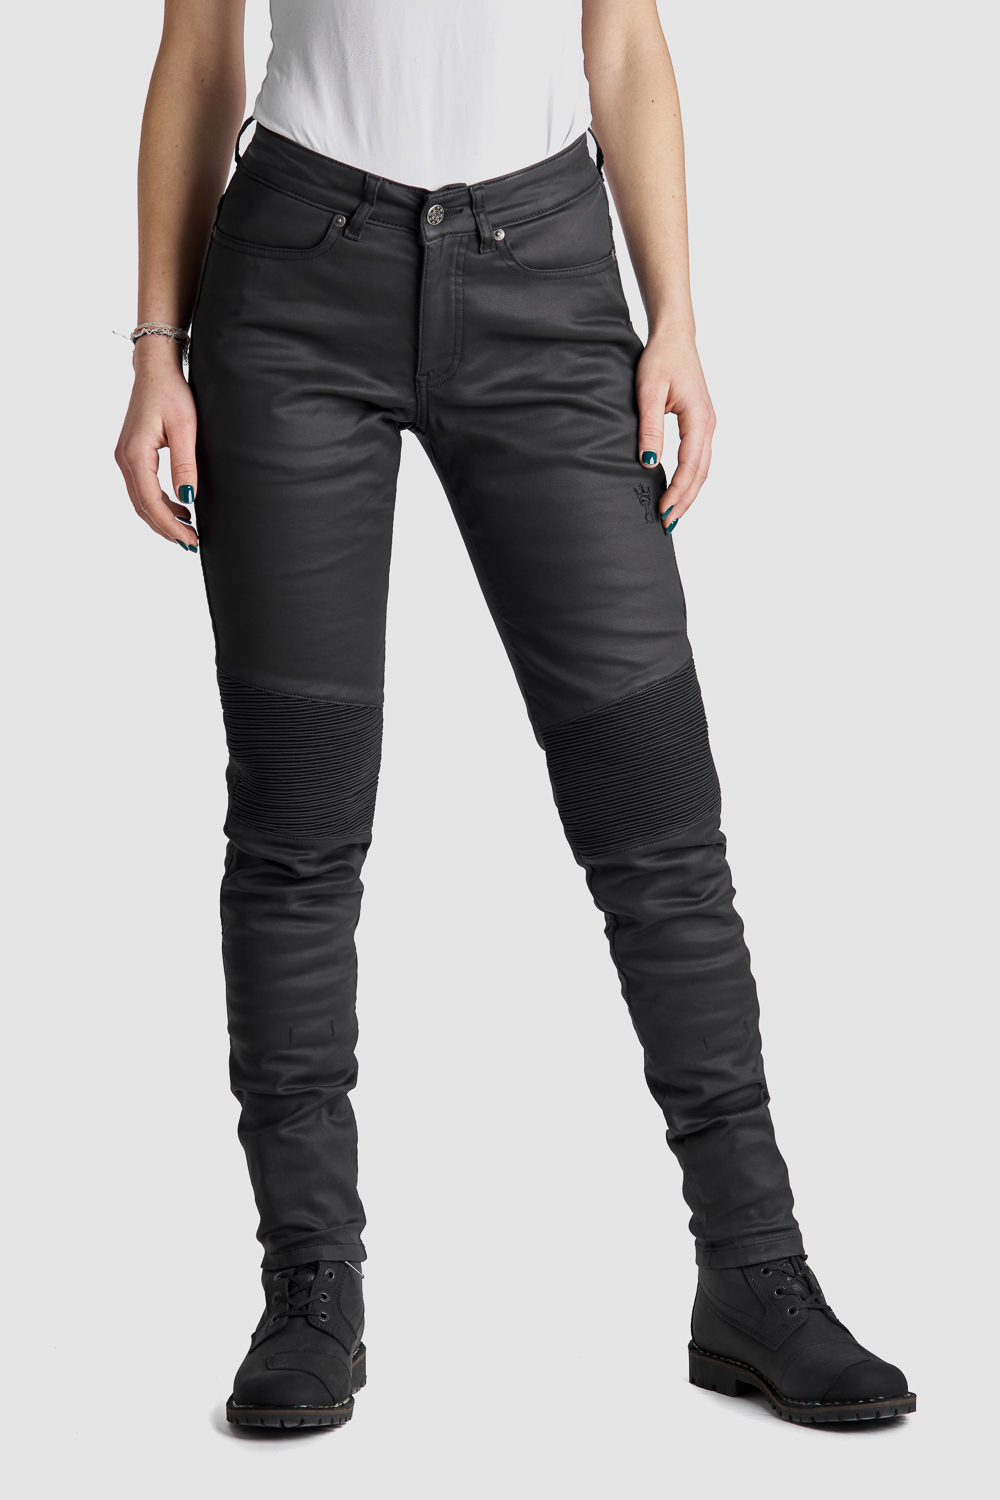 KUSARI KEV 02 – Women Motorcycle Jeans Slim-Fit Kevlar® 1